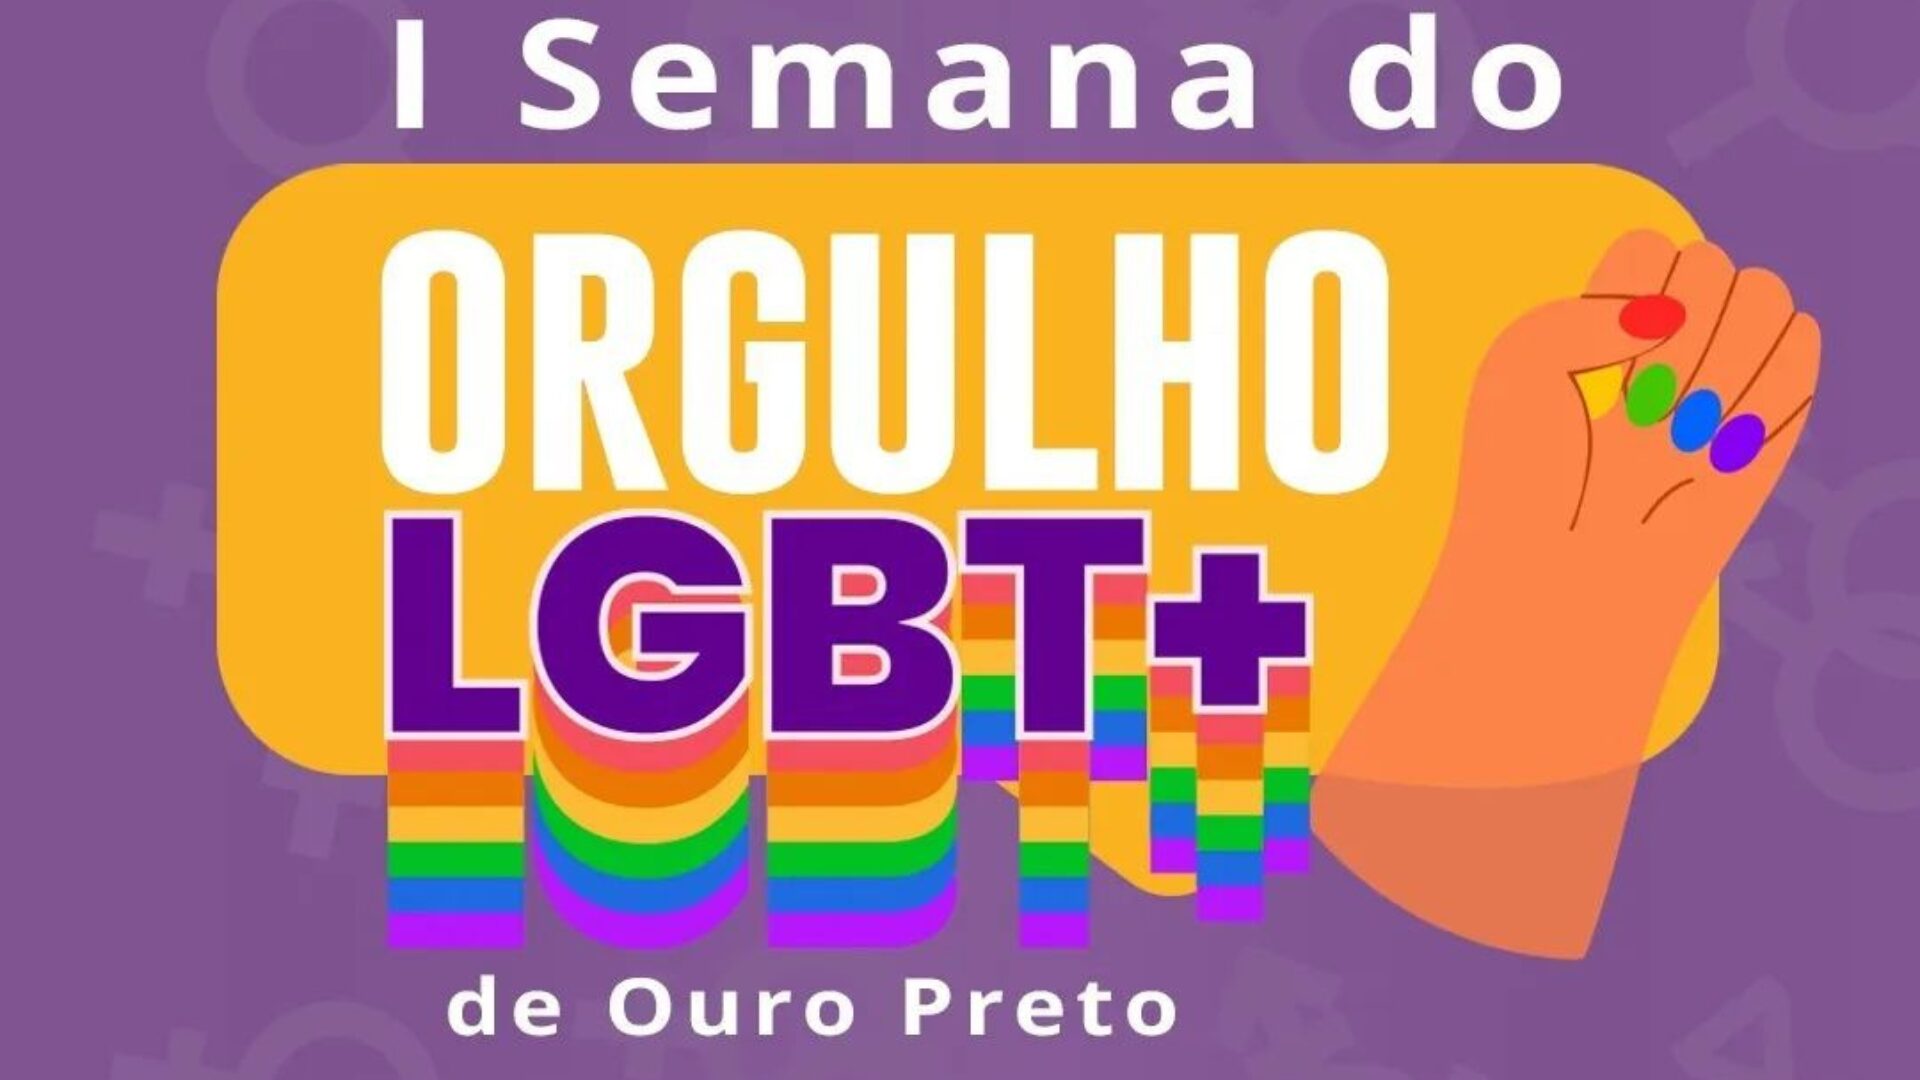 1ª Semana do Orgulho LGBT+